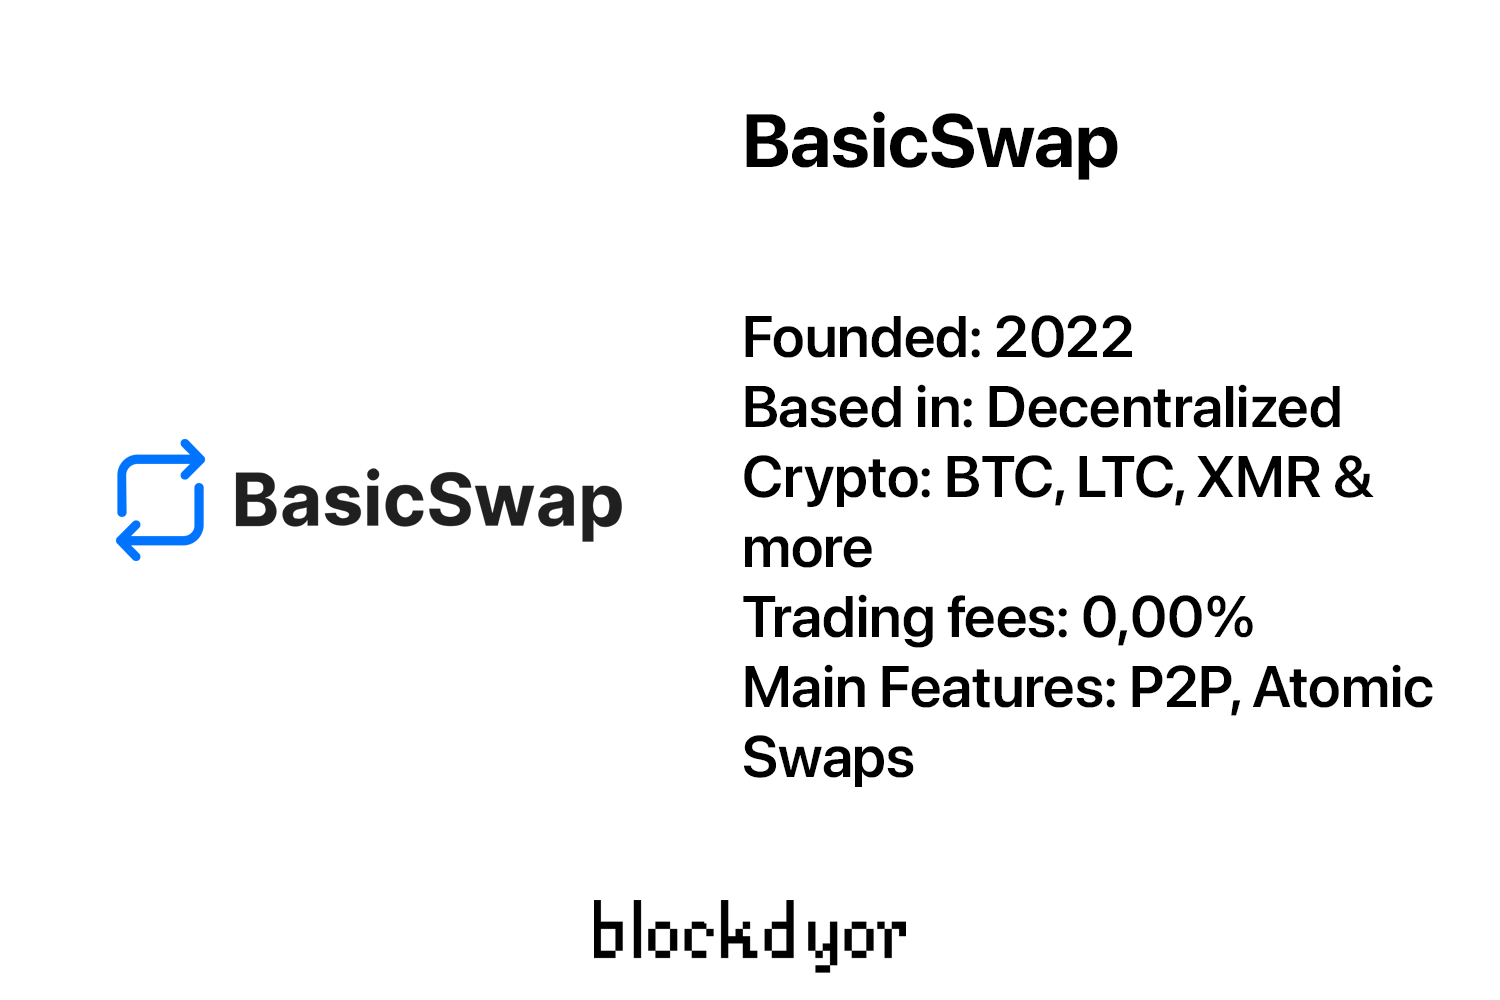 BasicSwap Overview